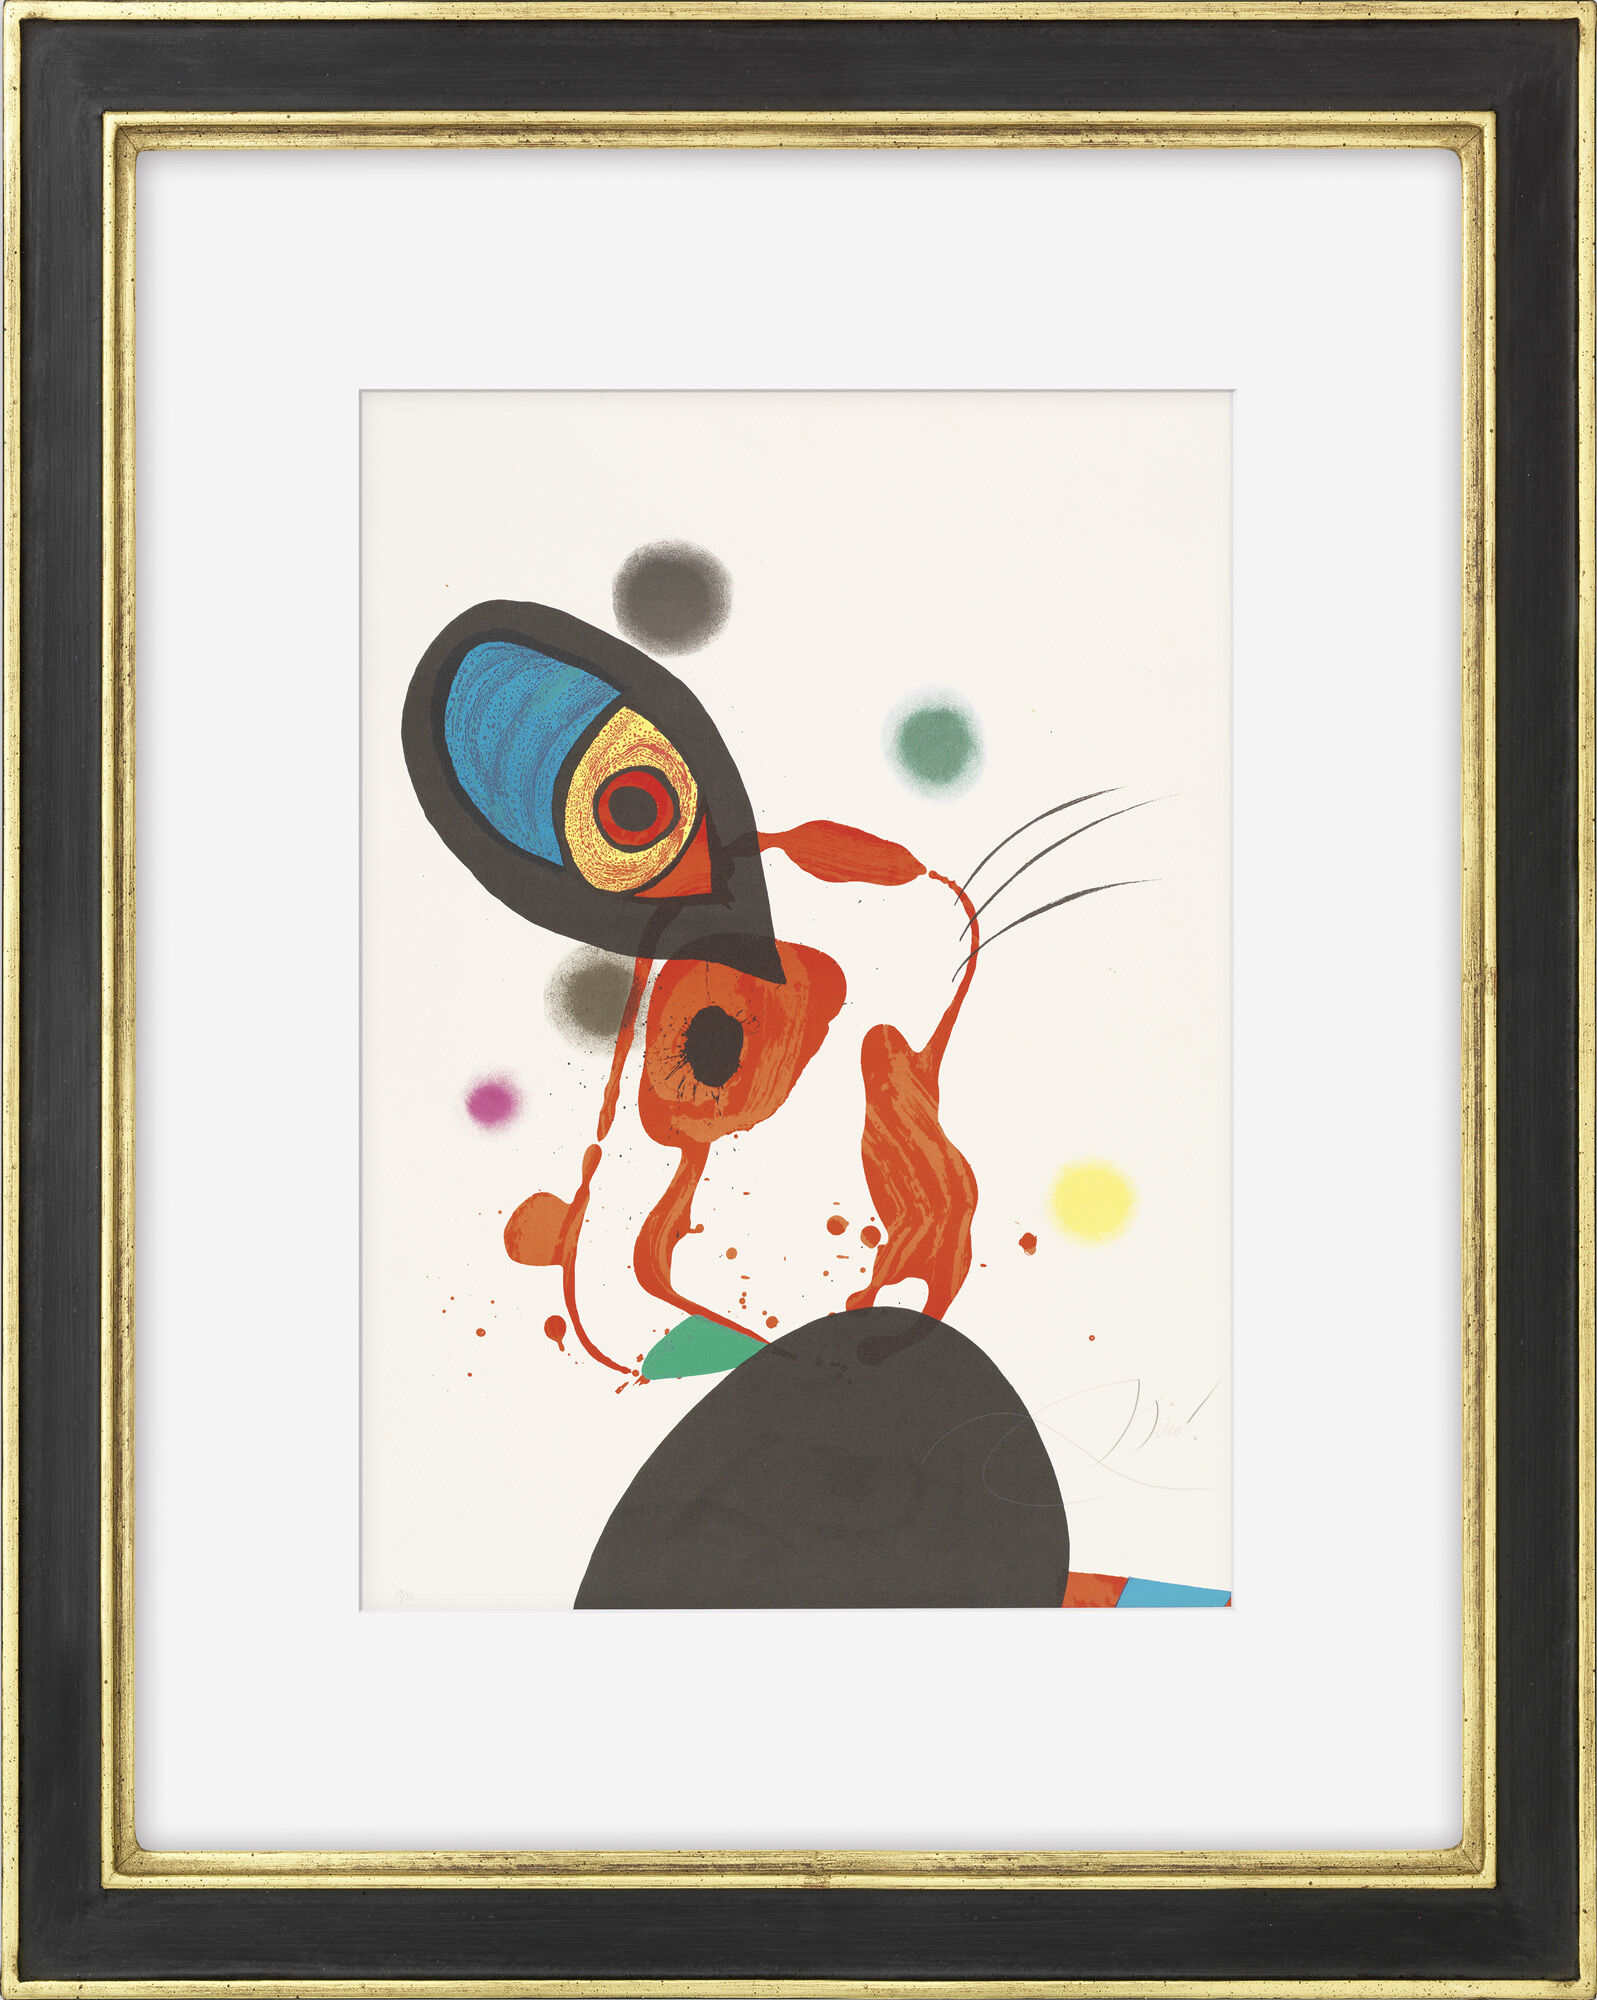 Beeld "L'Eunuque Impérial" (1975) von Joan Miró